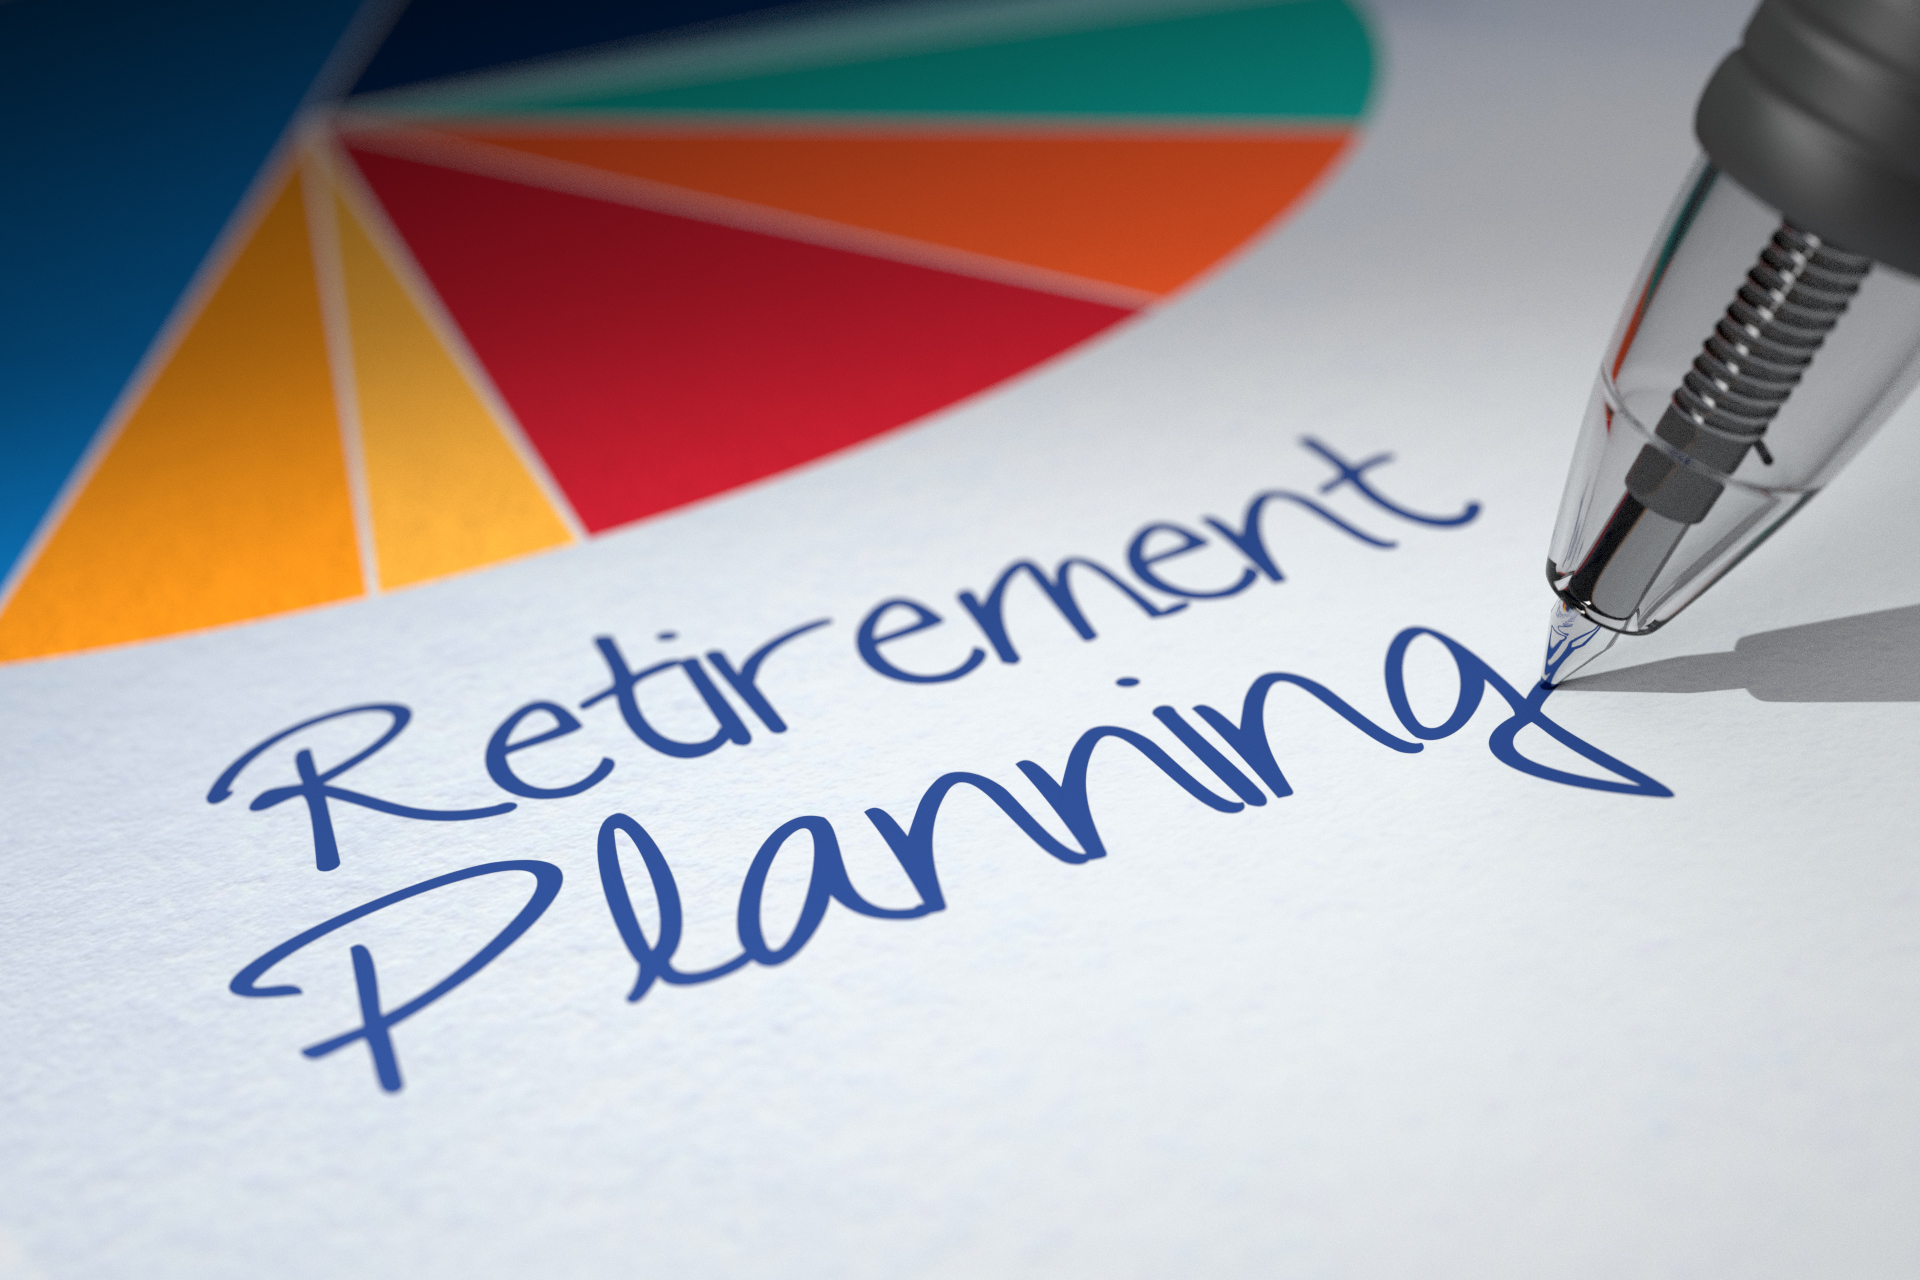 Retirement Planning script free image download